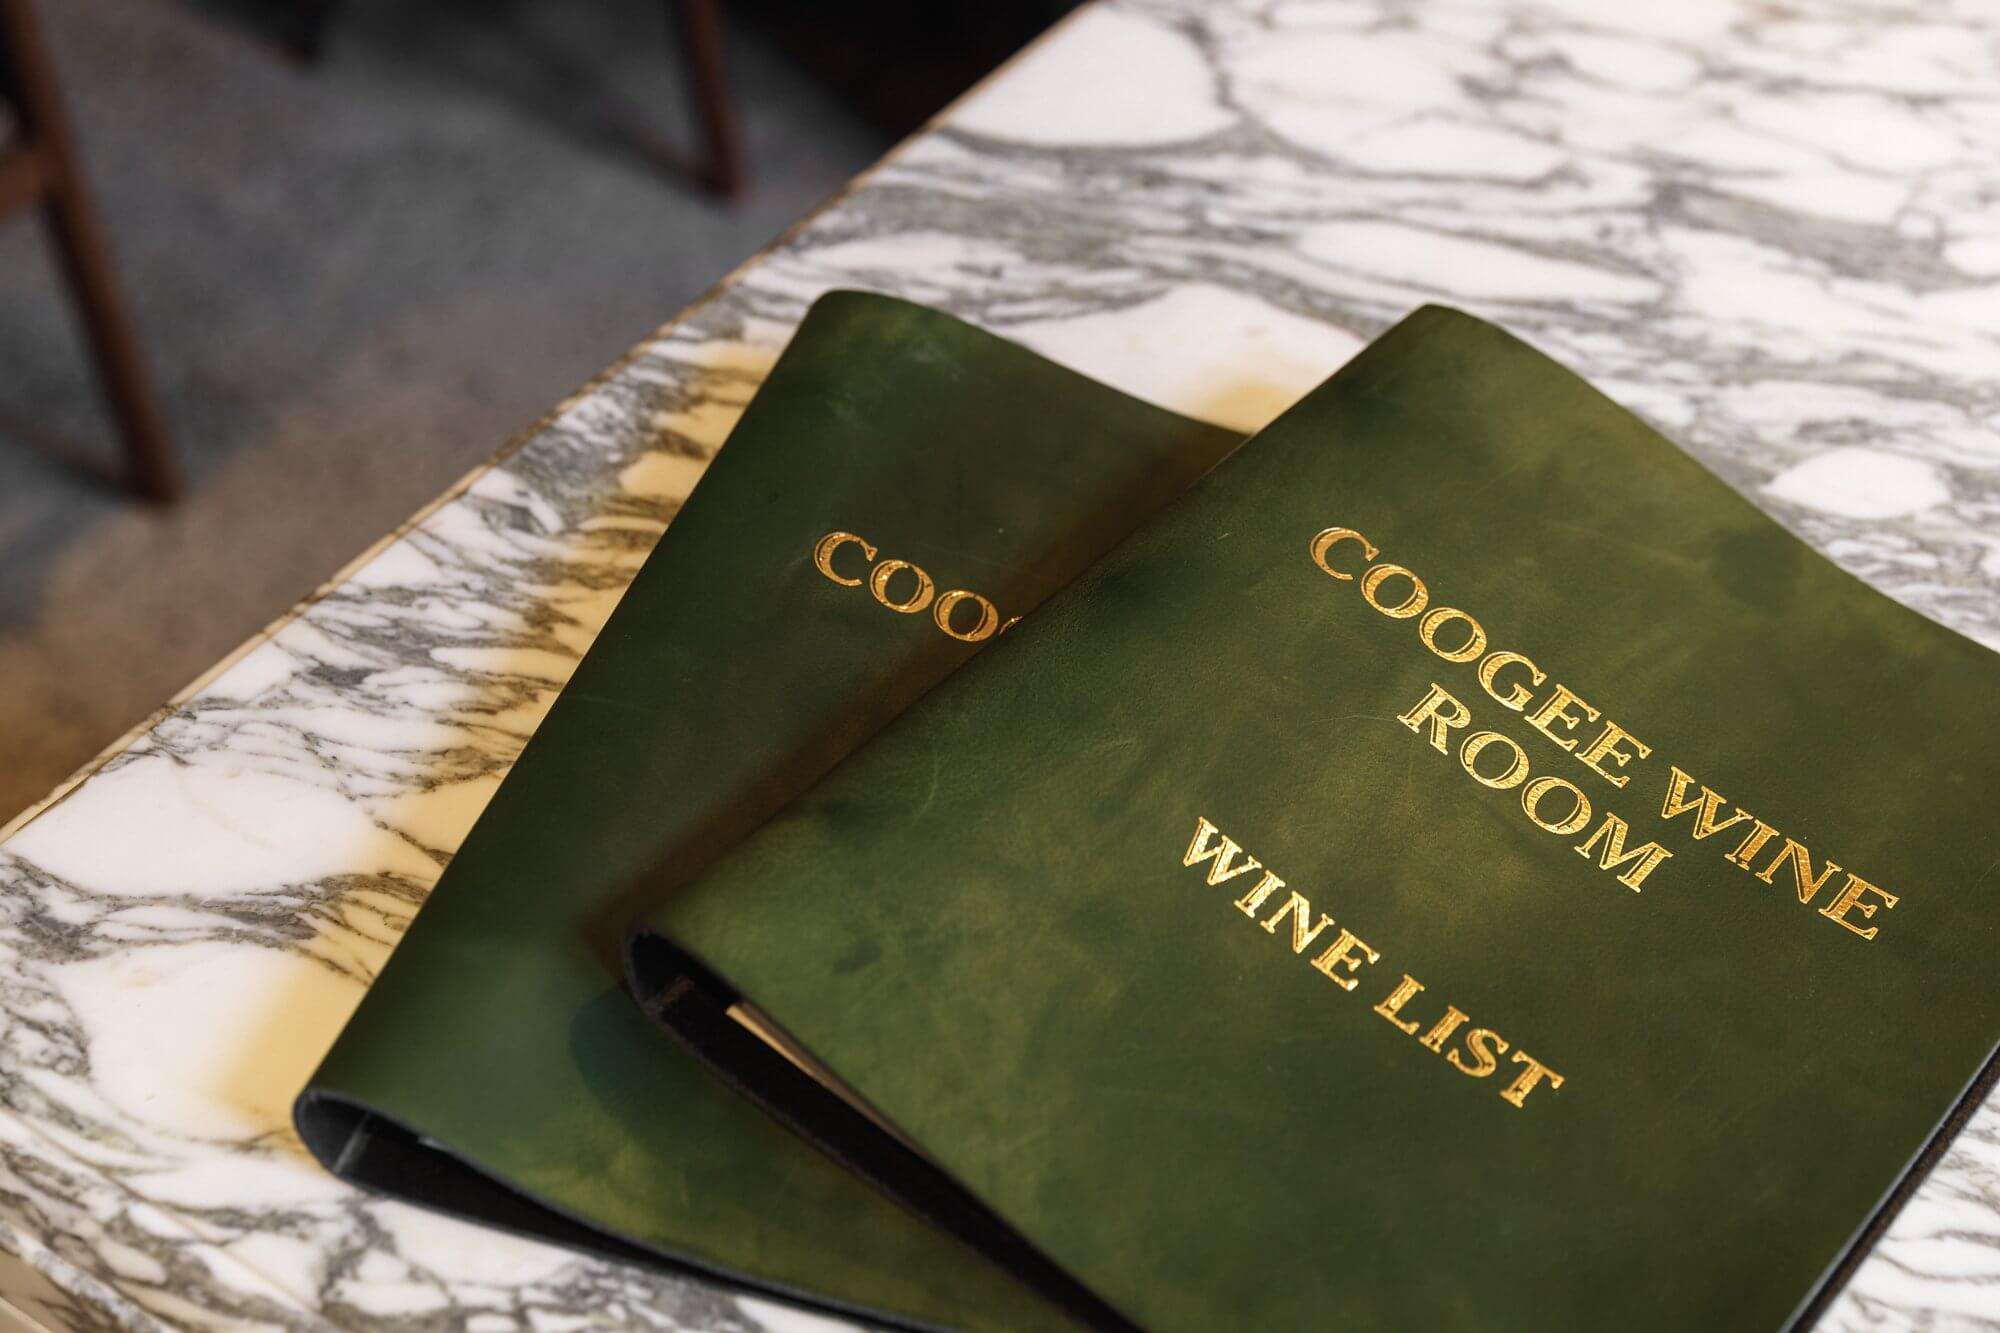 Distil coogee wine room logo branding menu covers green leather